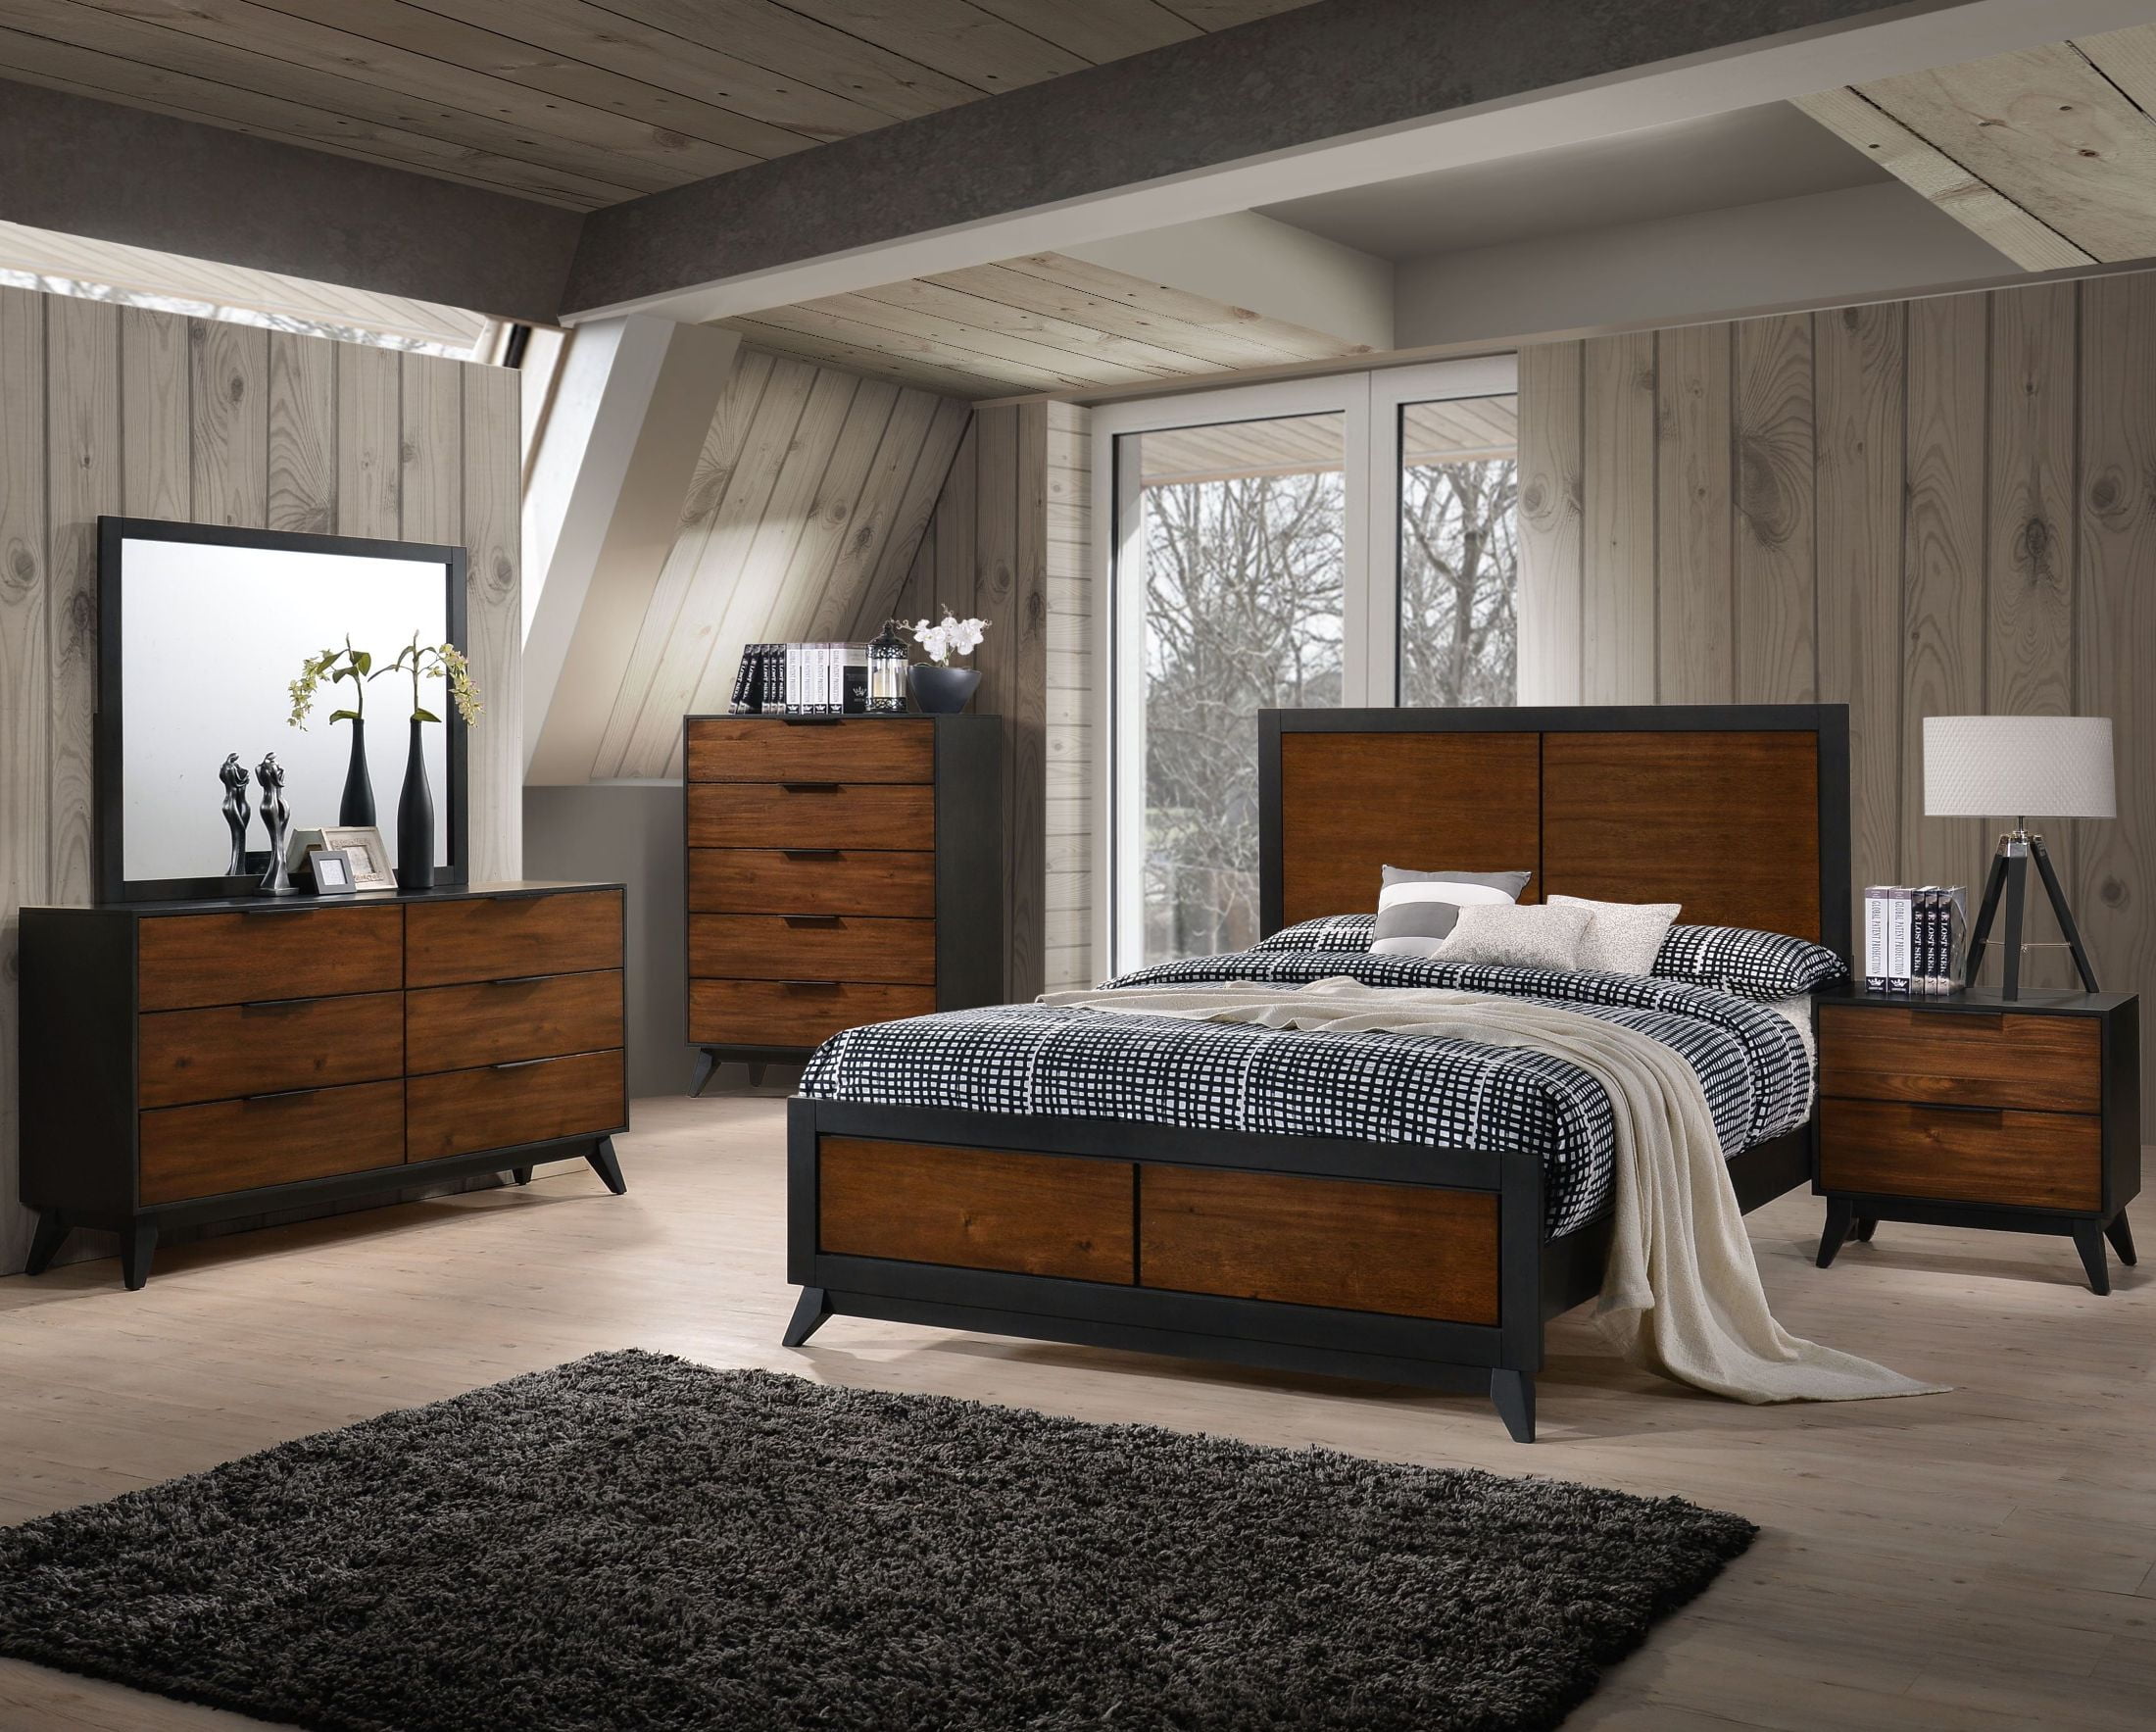 two tone bedroom furniture set